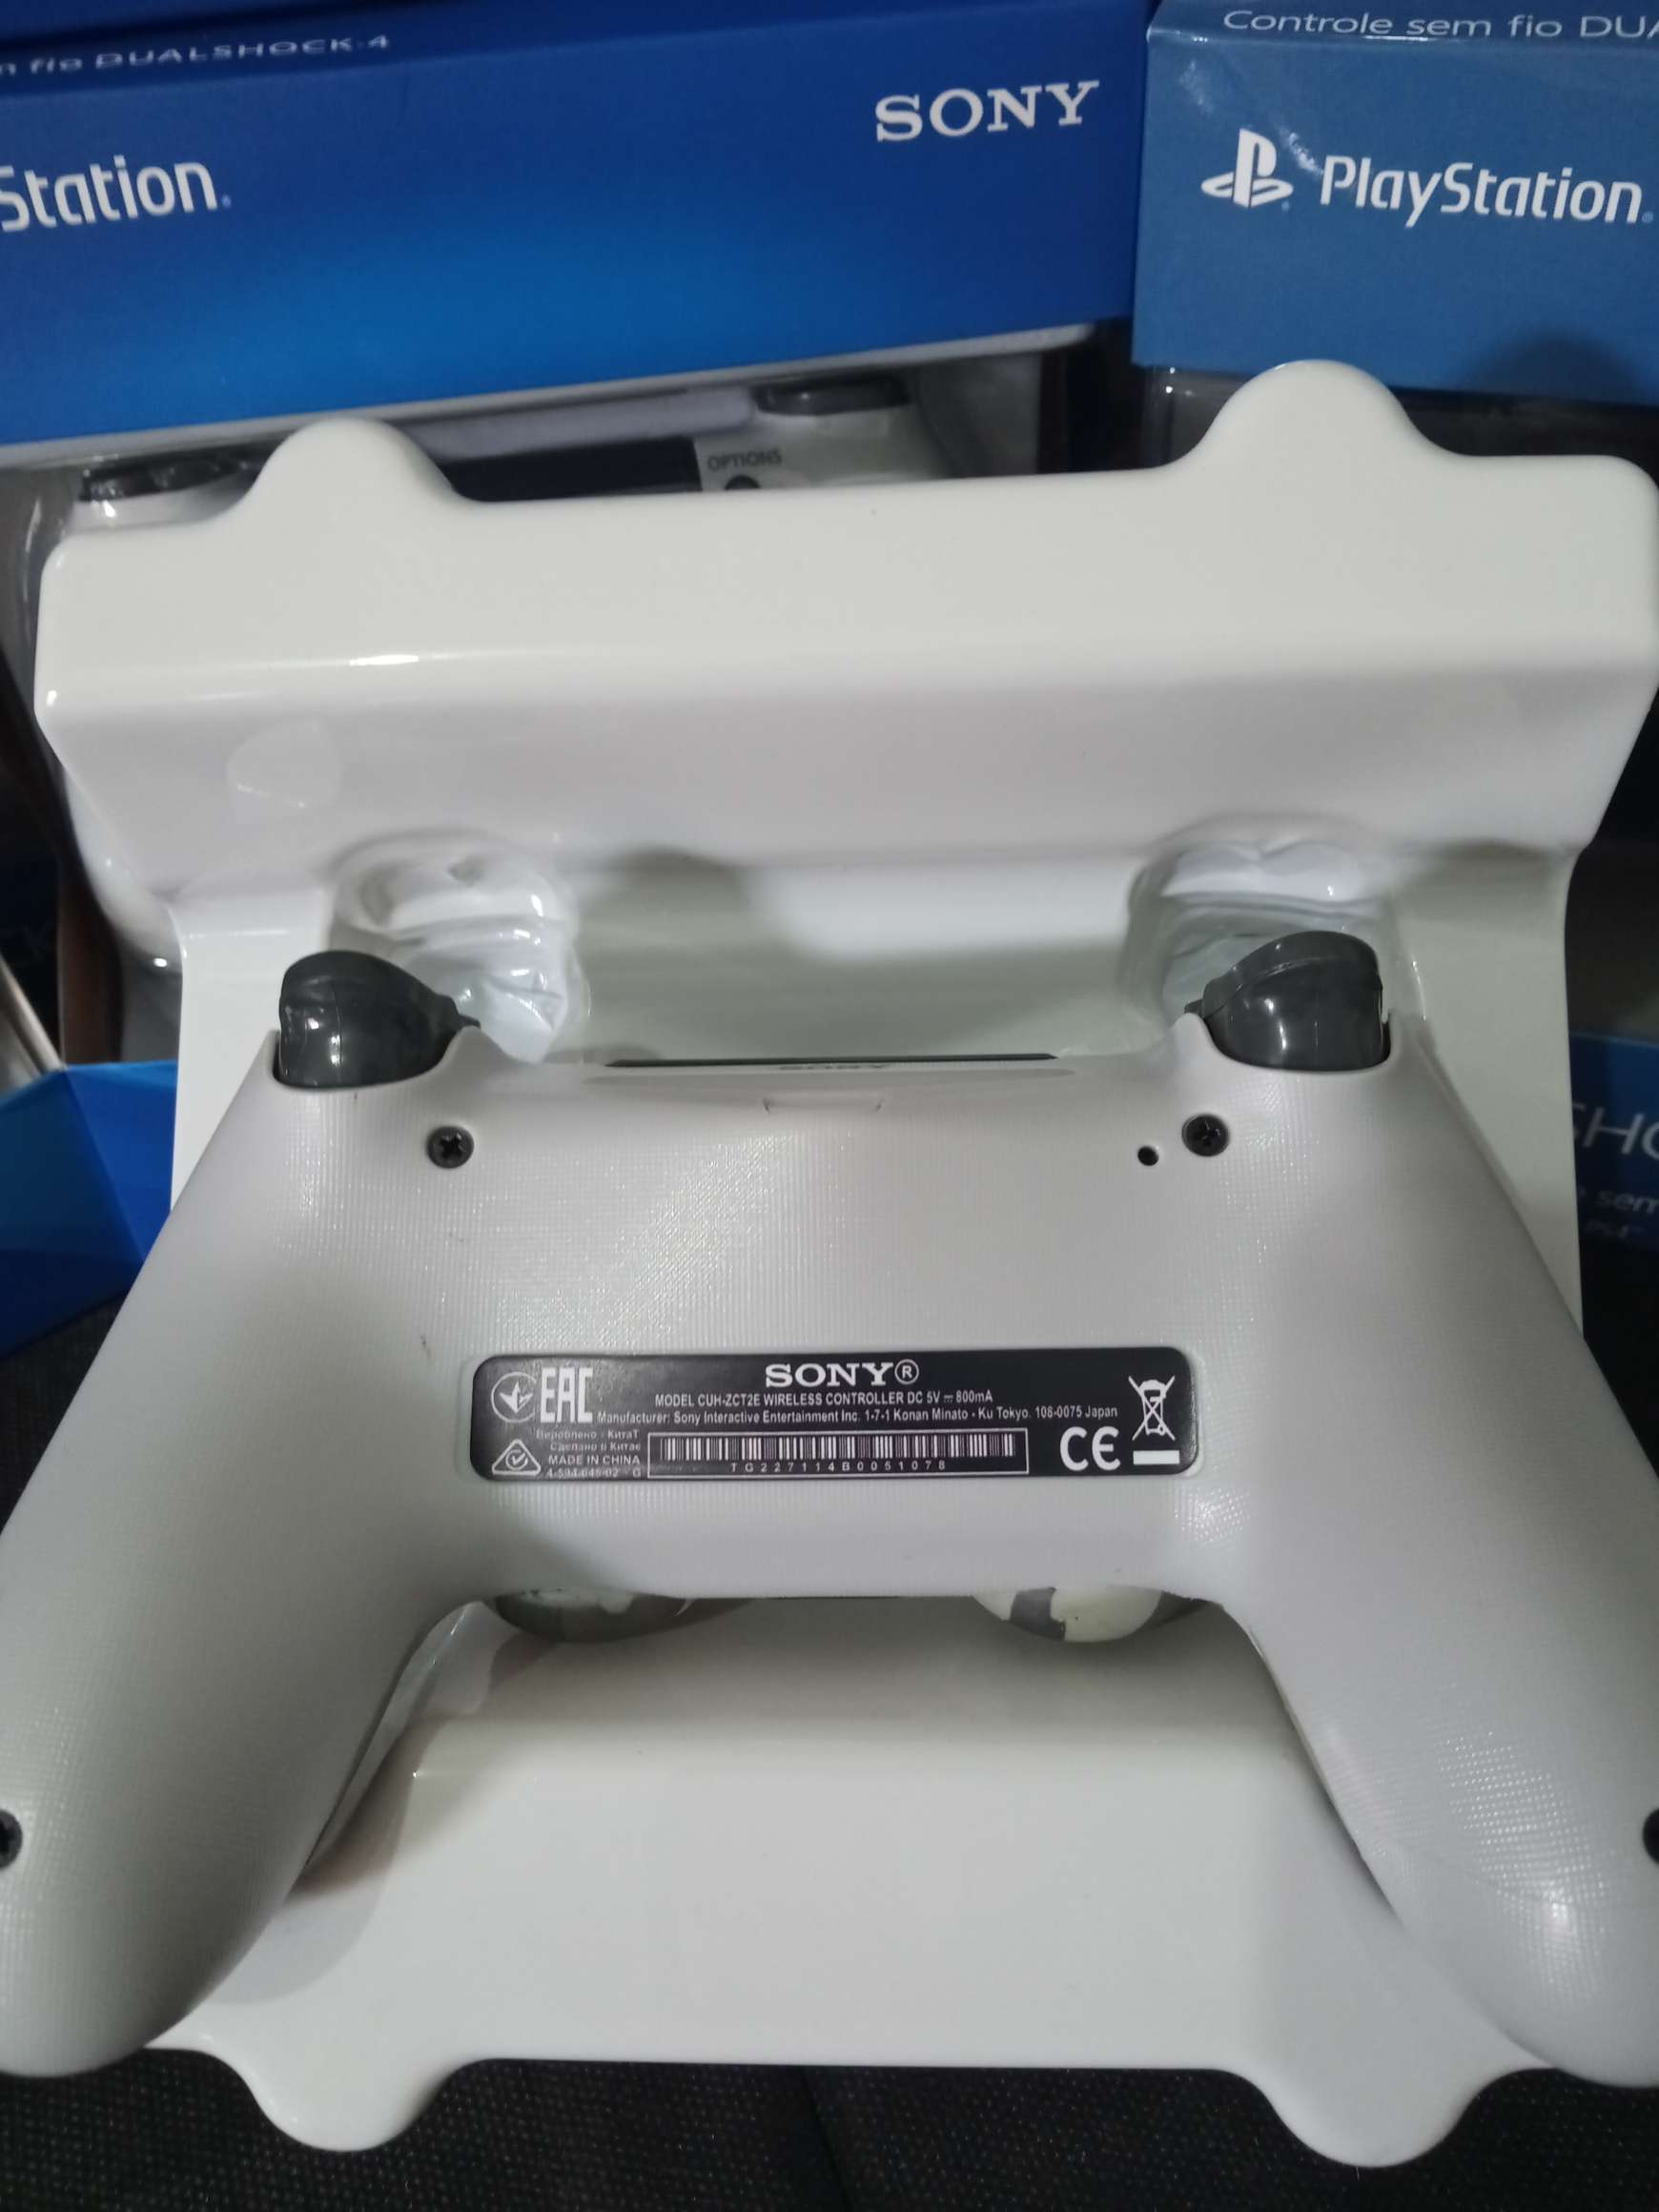 MAGAZINELUIZA - APP + CLUBE] Controle DualShock 4 PS4 camuflado - r$ 218,41  + FG